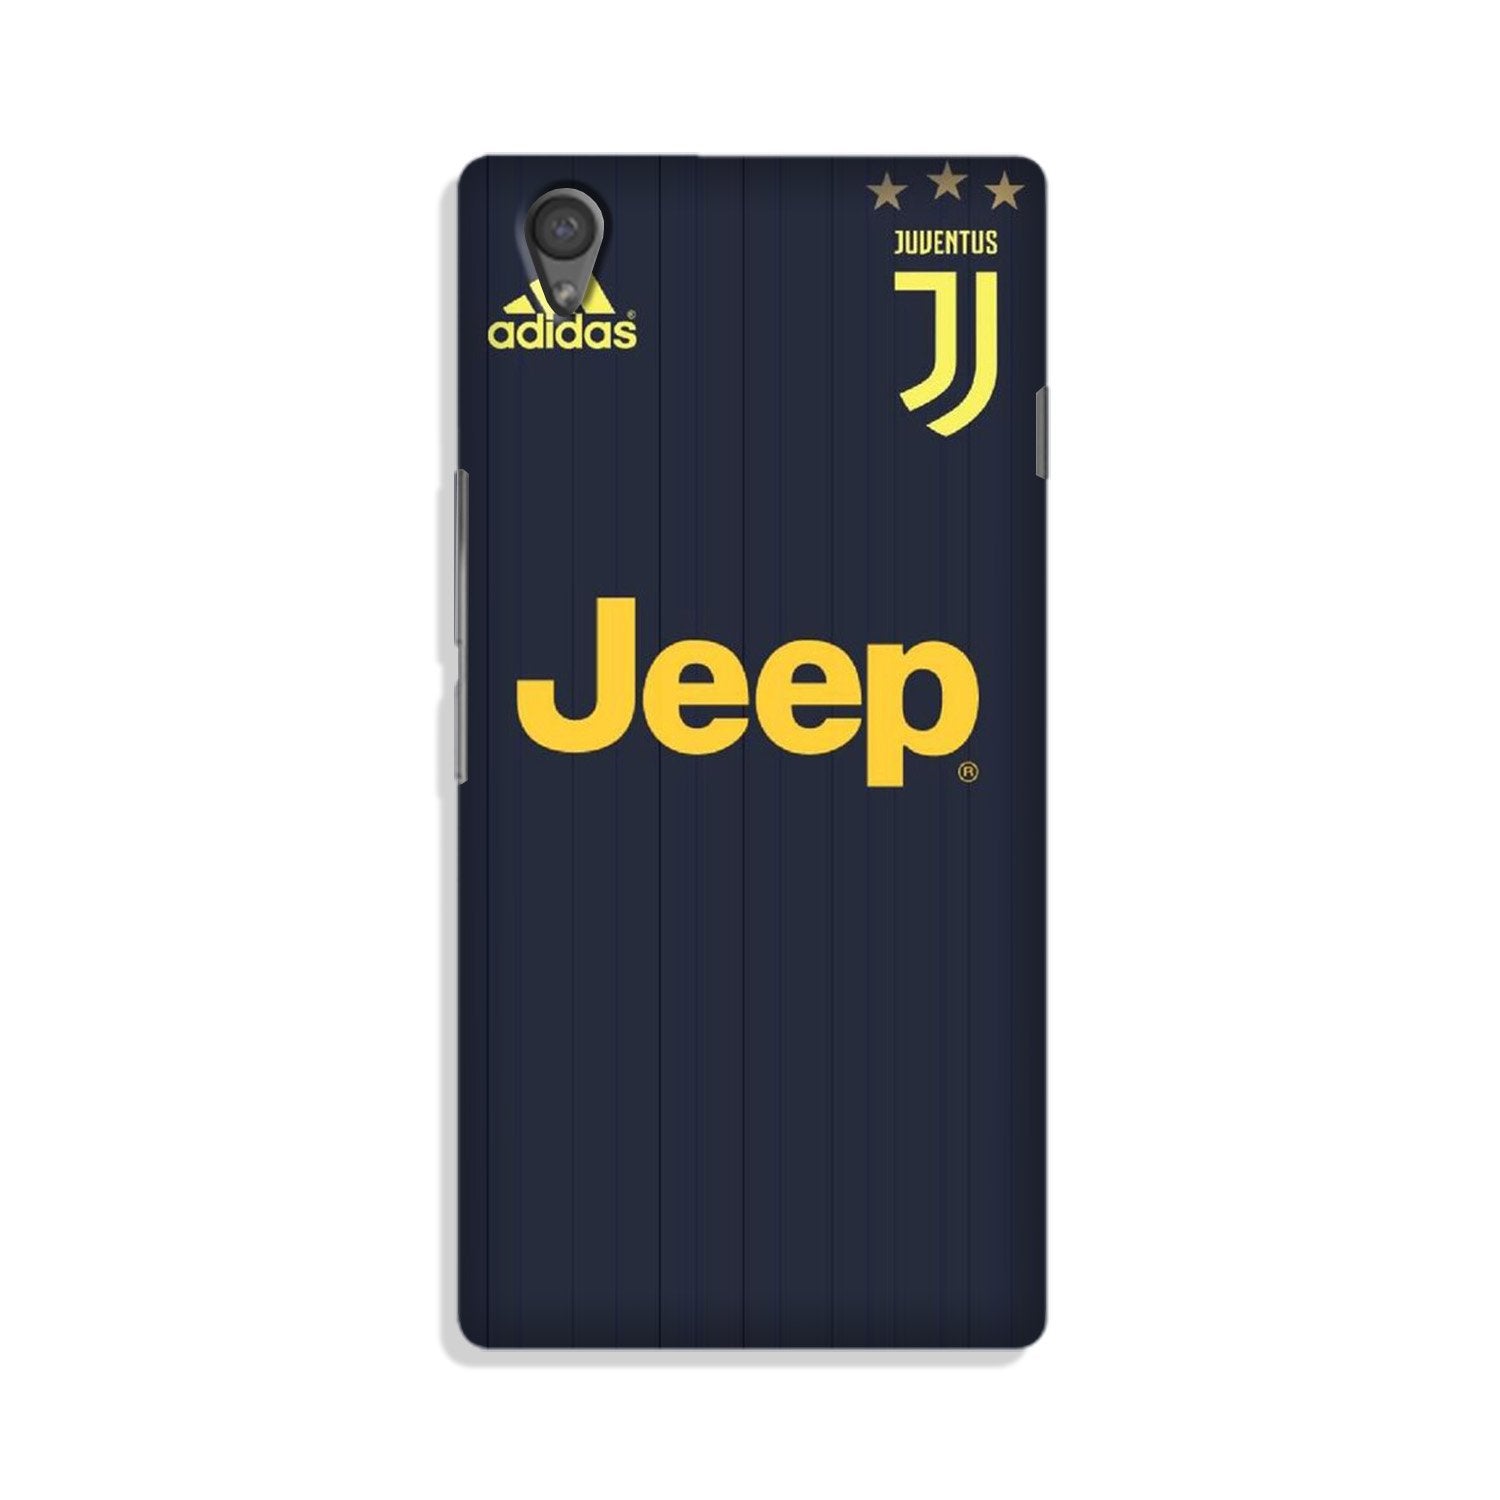 Jeep Juventus Case for OnePlus X(Design - 161)